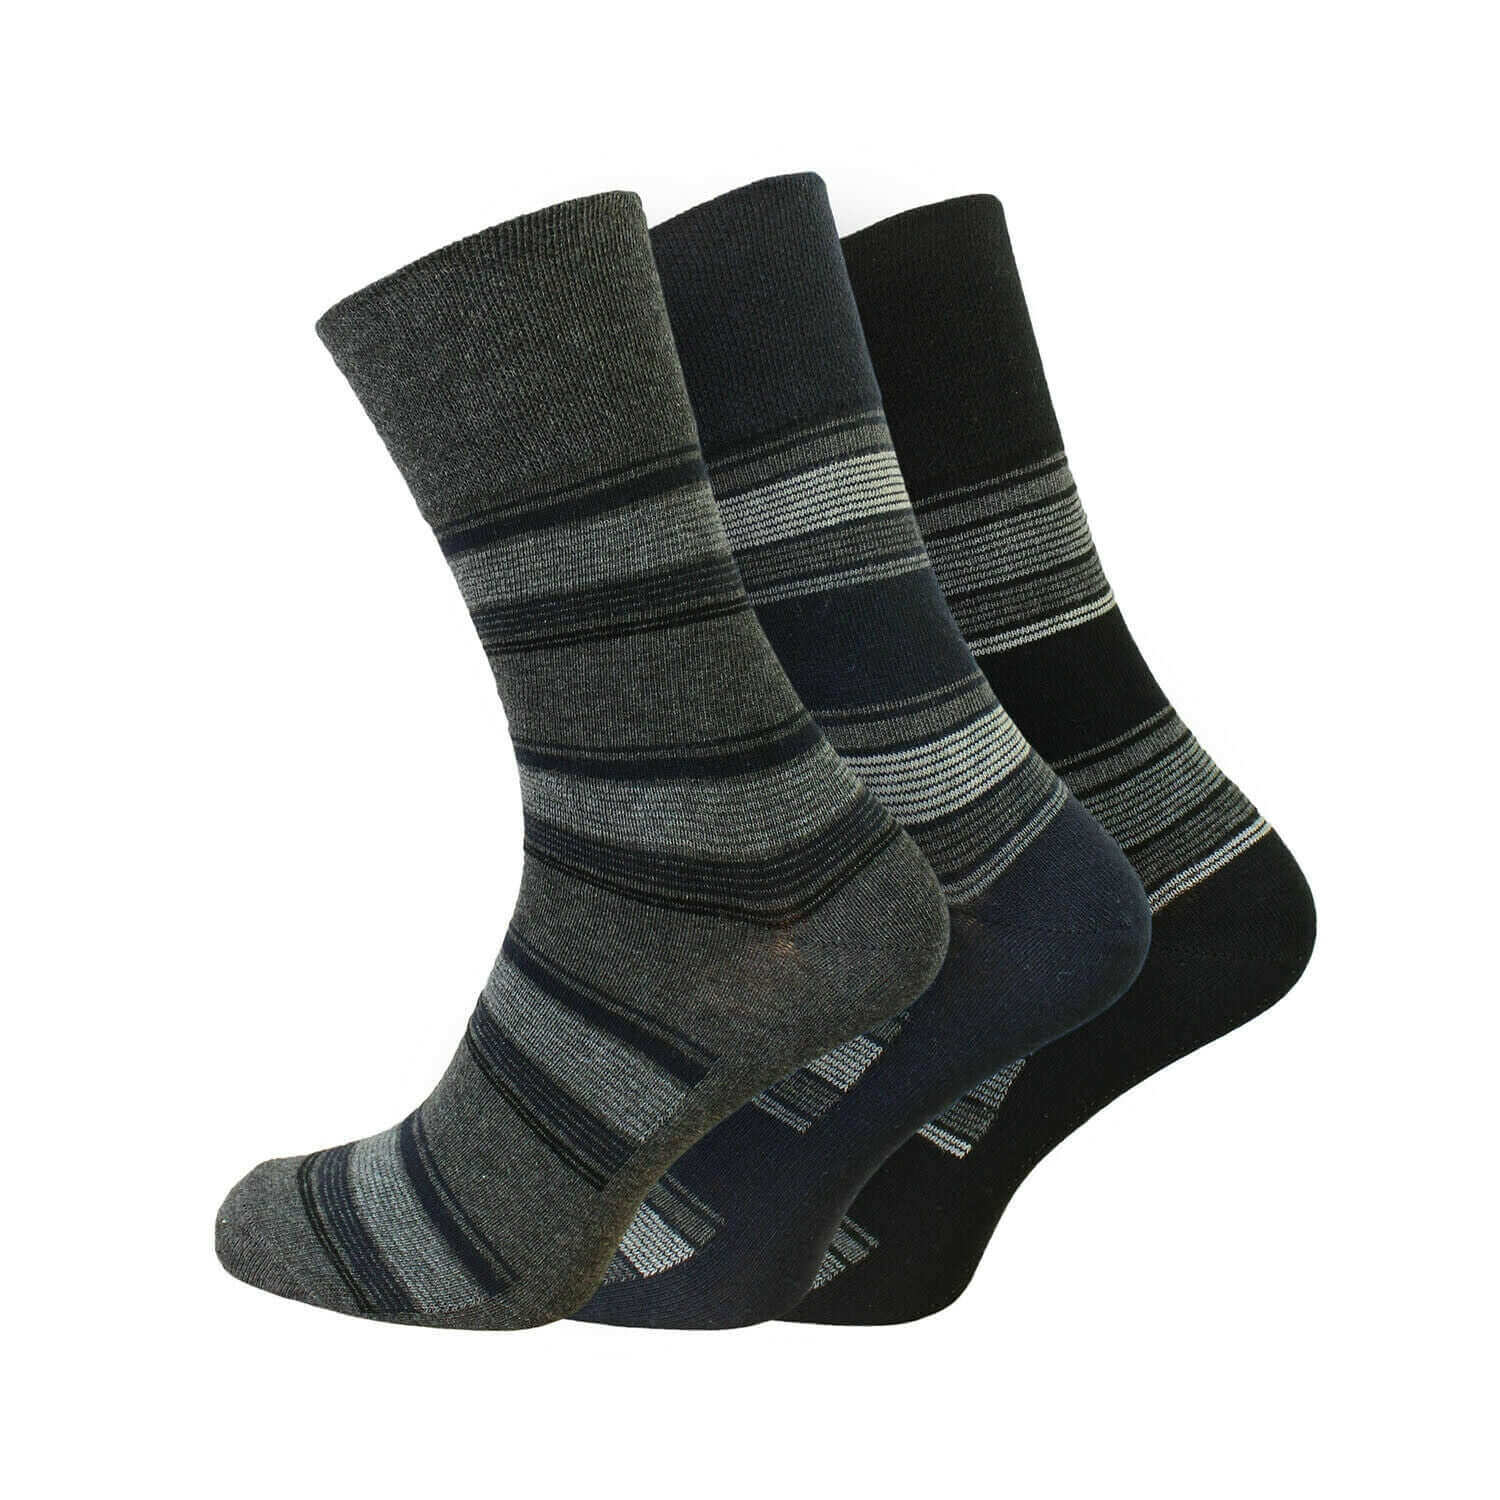 Men' Socks Gentle Grip UK 6-11 EU 39-45 Non Elastic Grey Blue Black Striped Pack